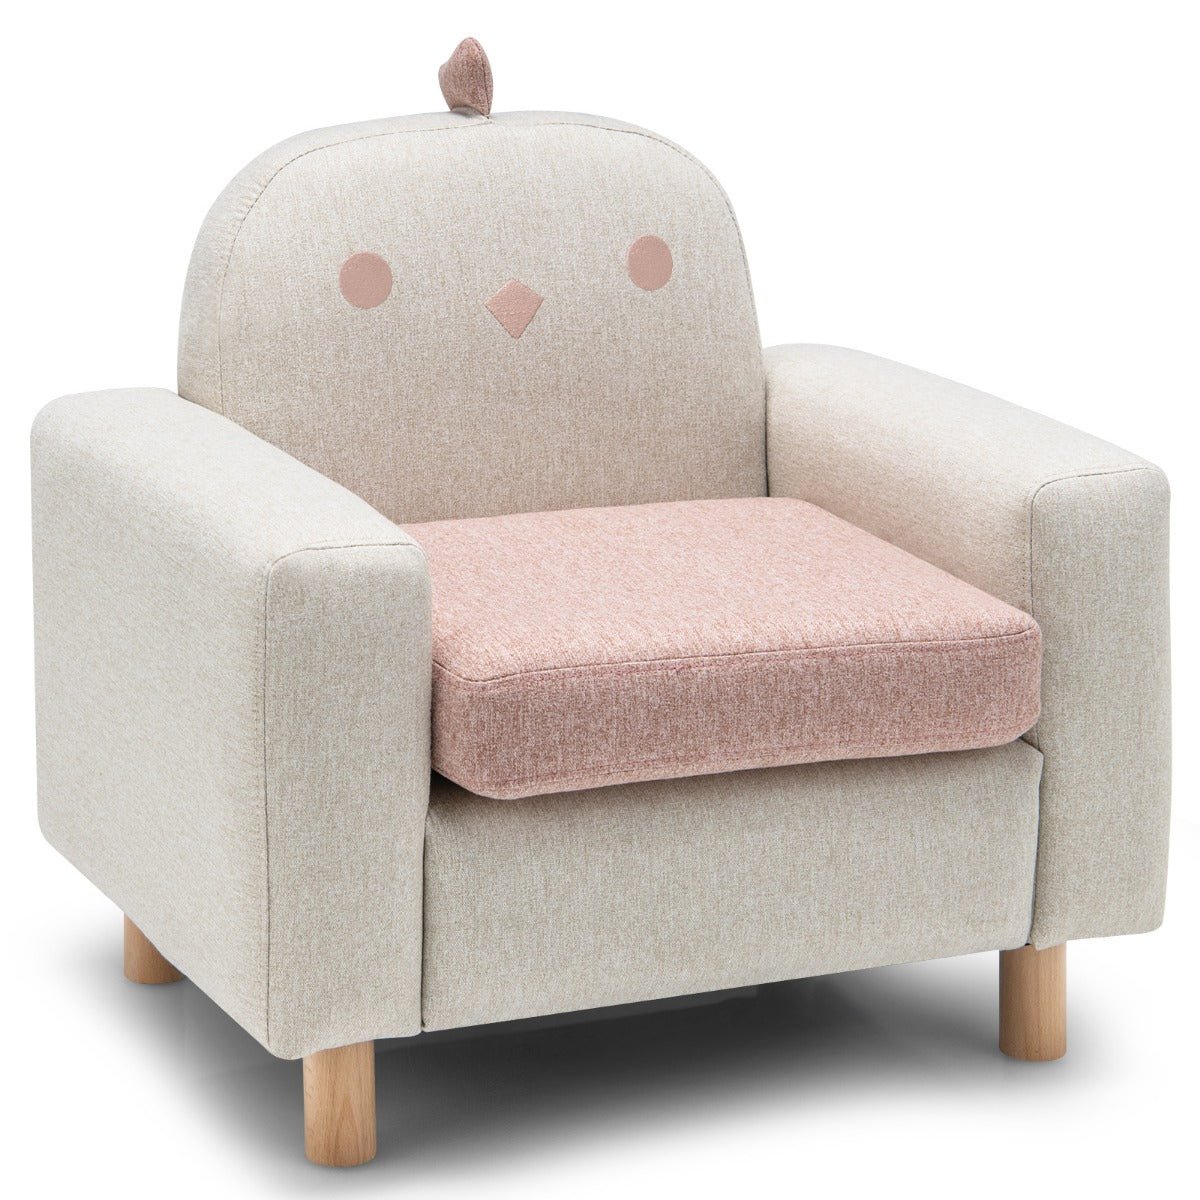 Kids Sofa Chair: Wooden Armrest, Thick Cushion, Beech Legs - Embrace Relaxation